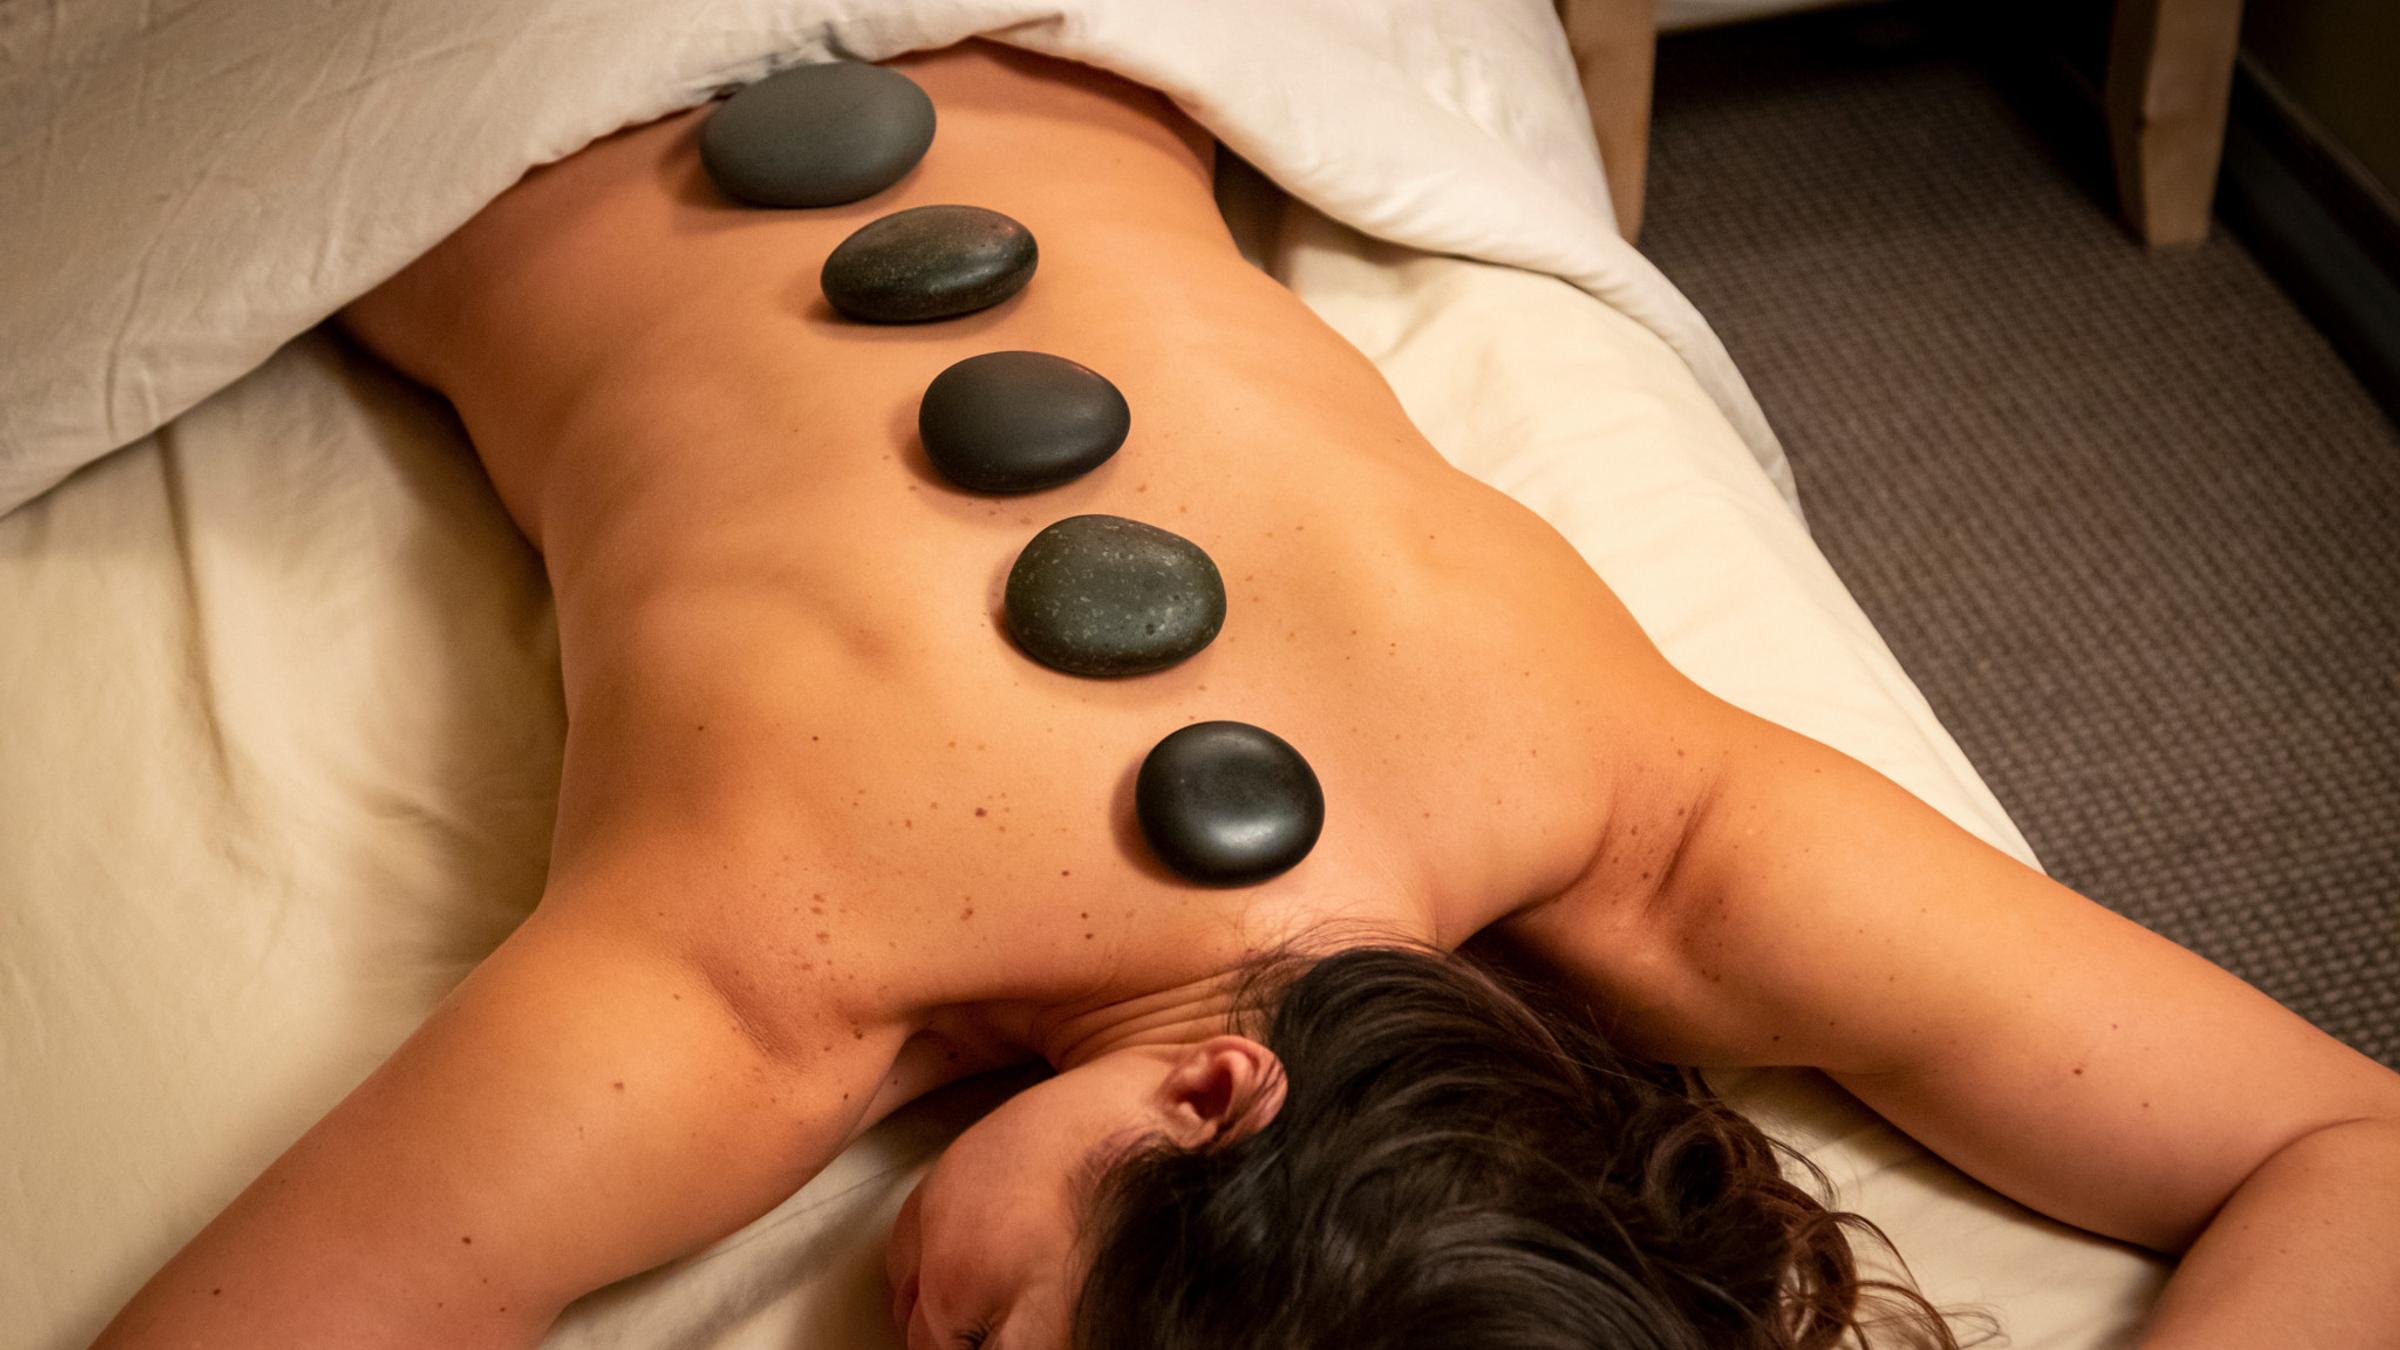 Hot stone massage treatment